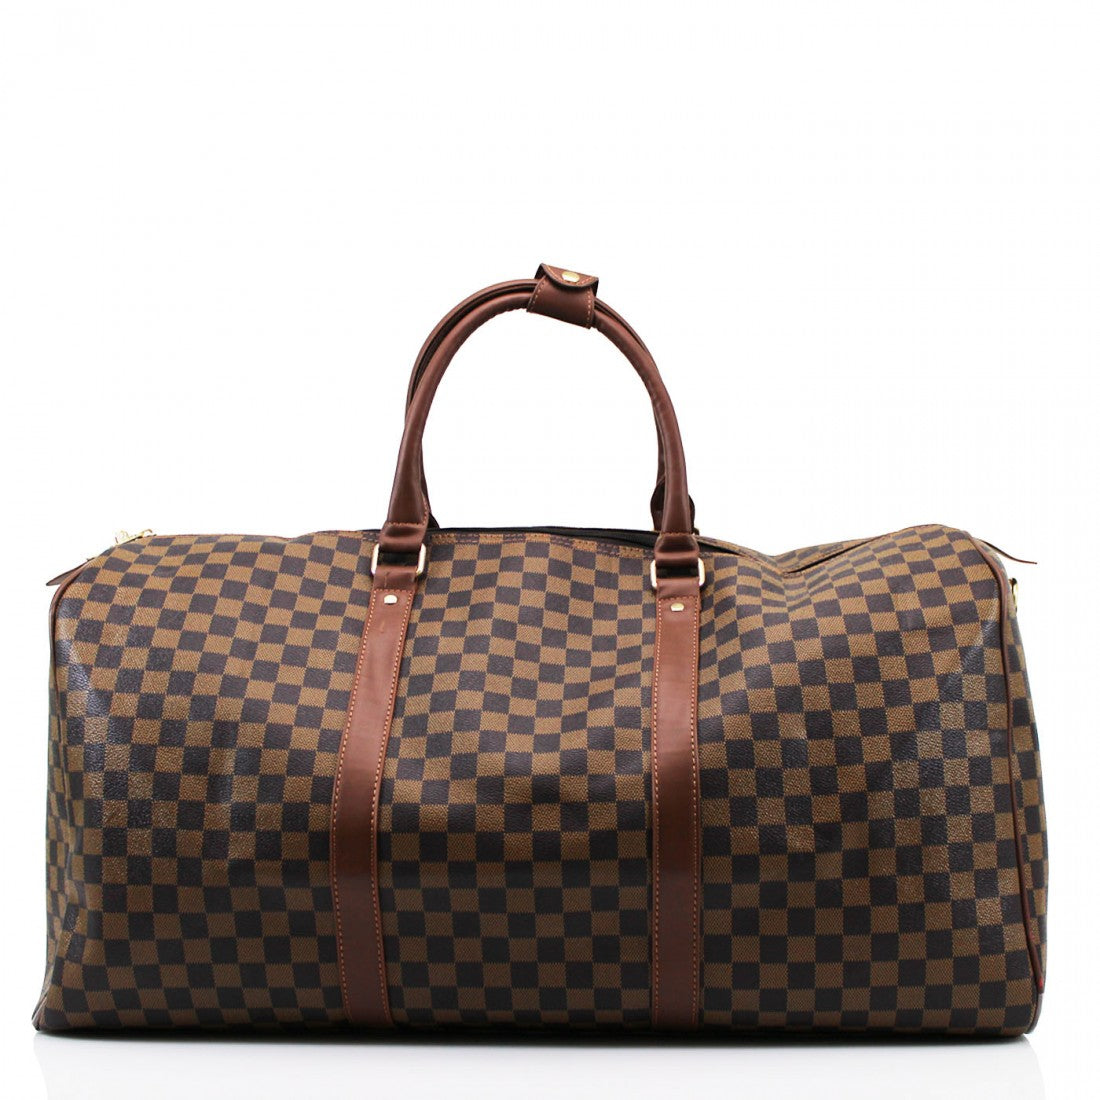 Louis Vuitton Handbags for Women -  UK